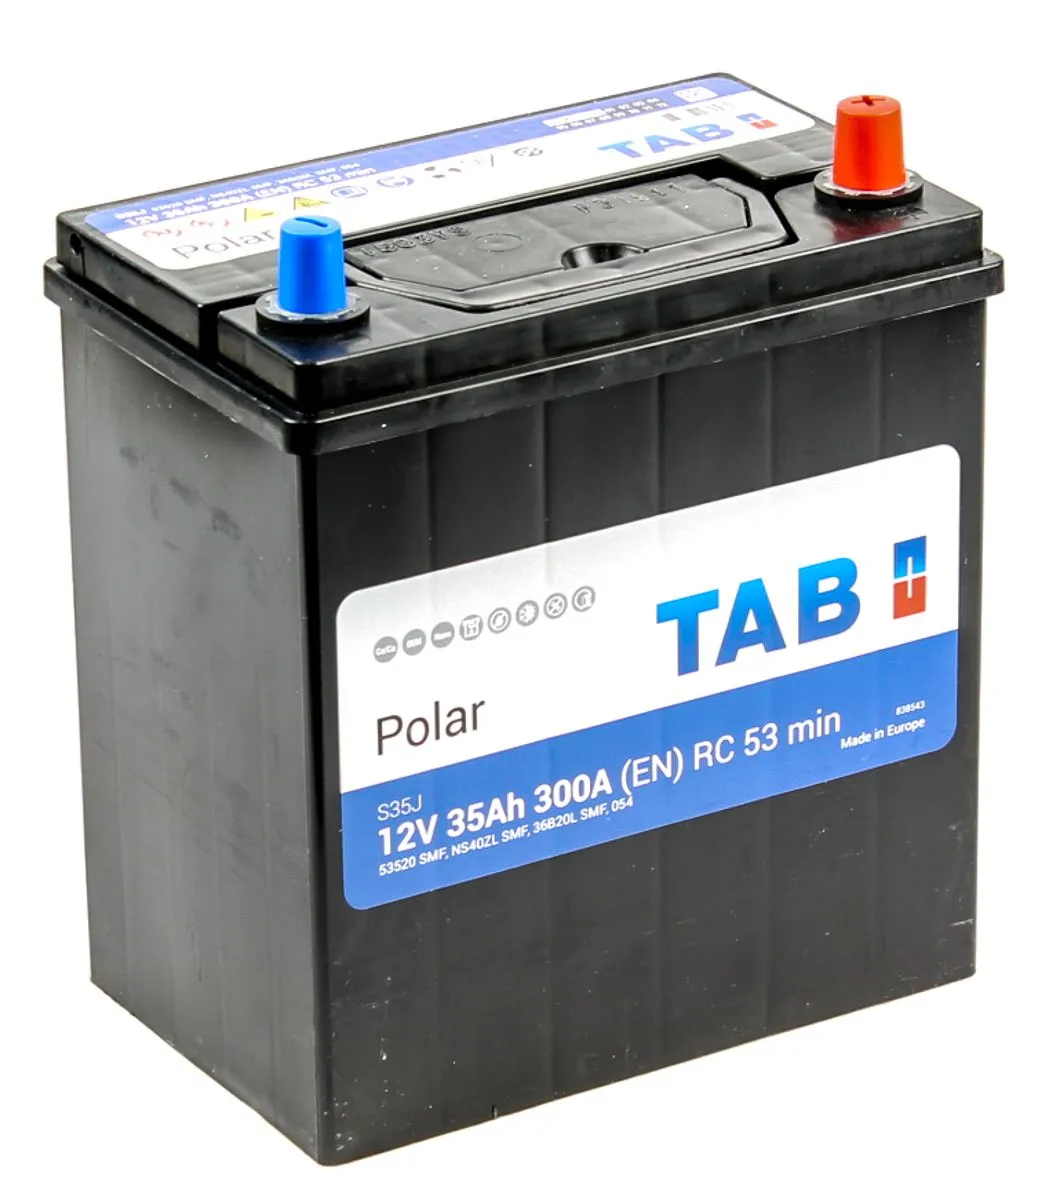 Аккумулятор TAB Polar 6СТ-35.1 (53522) яп. ст/тонк.кл.